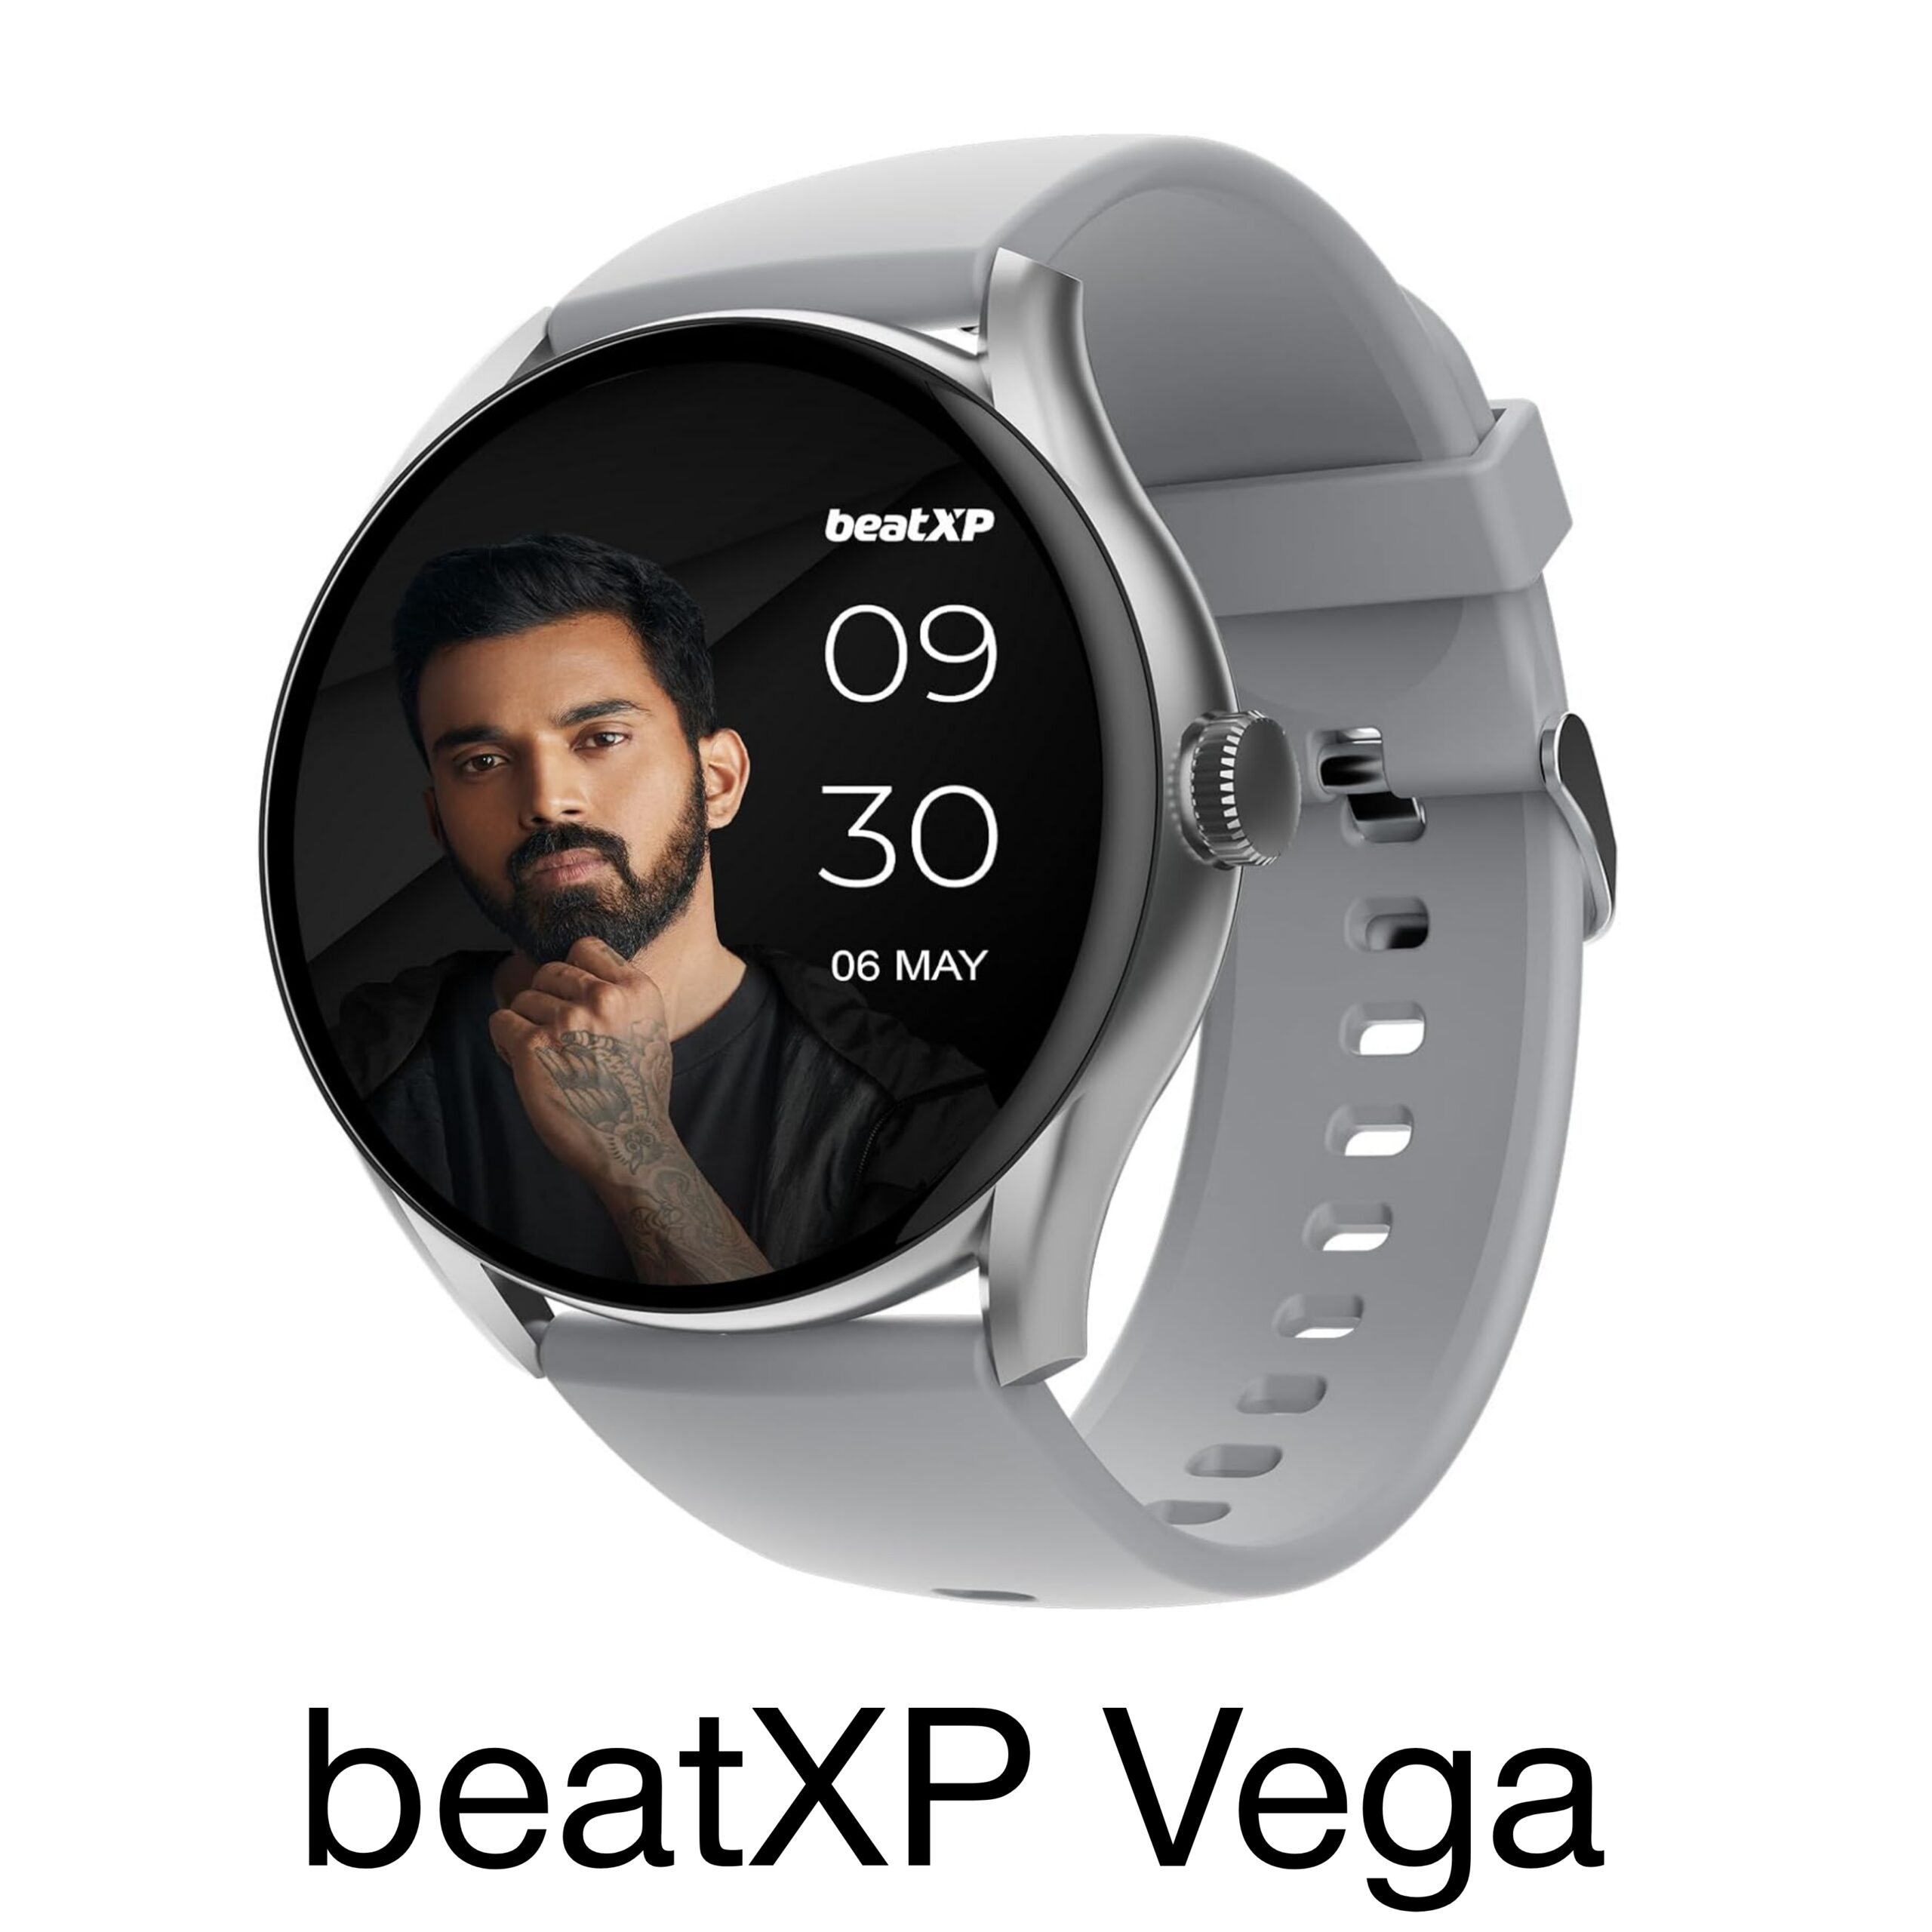 beatXP Vega